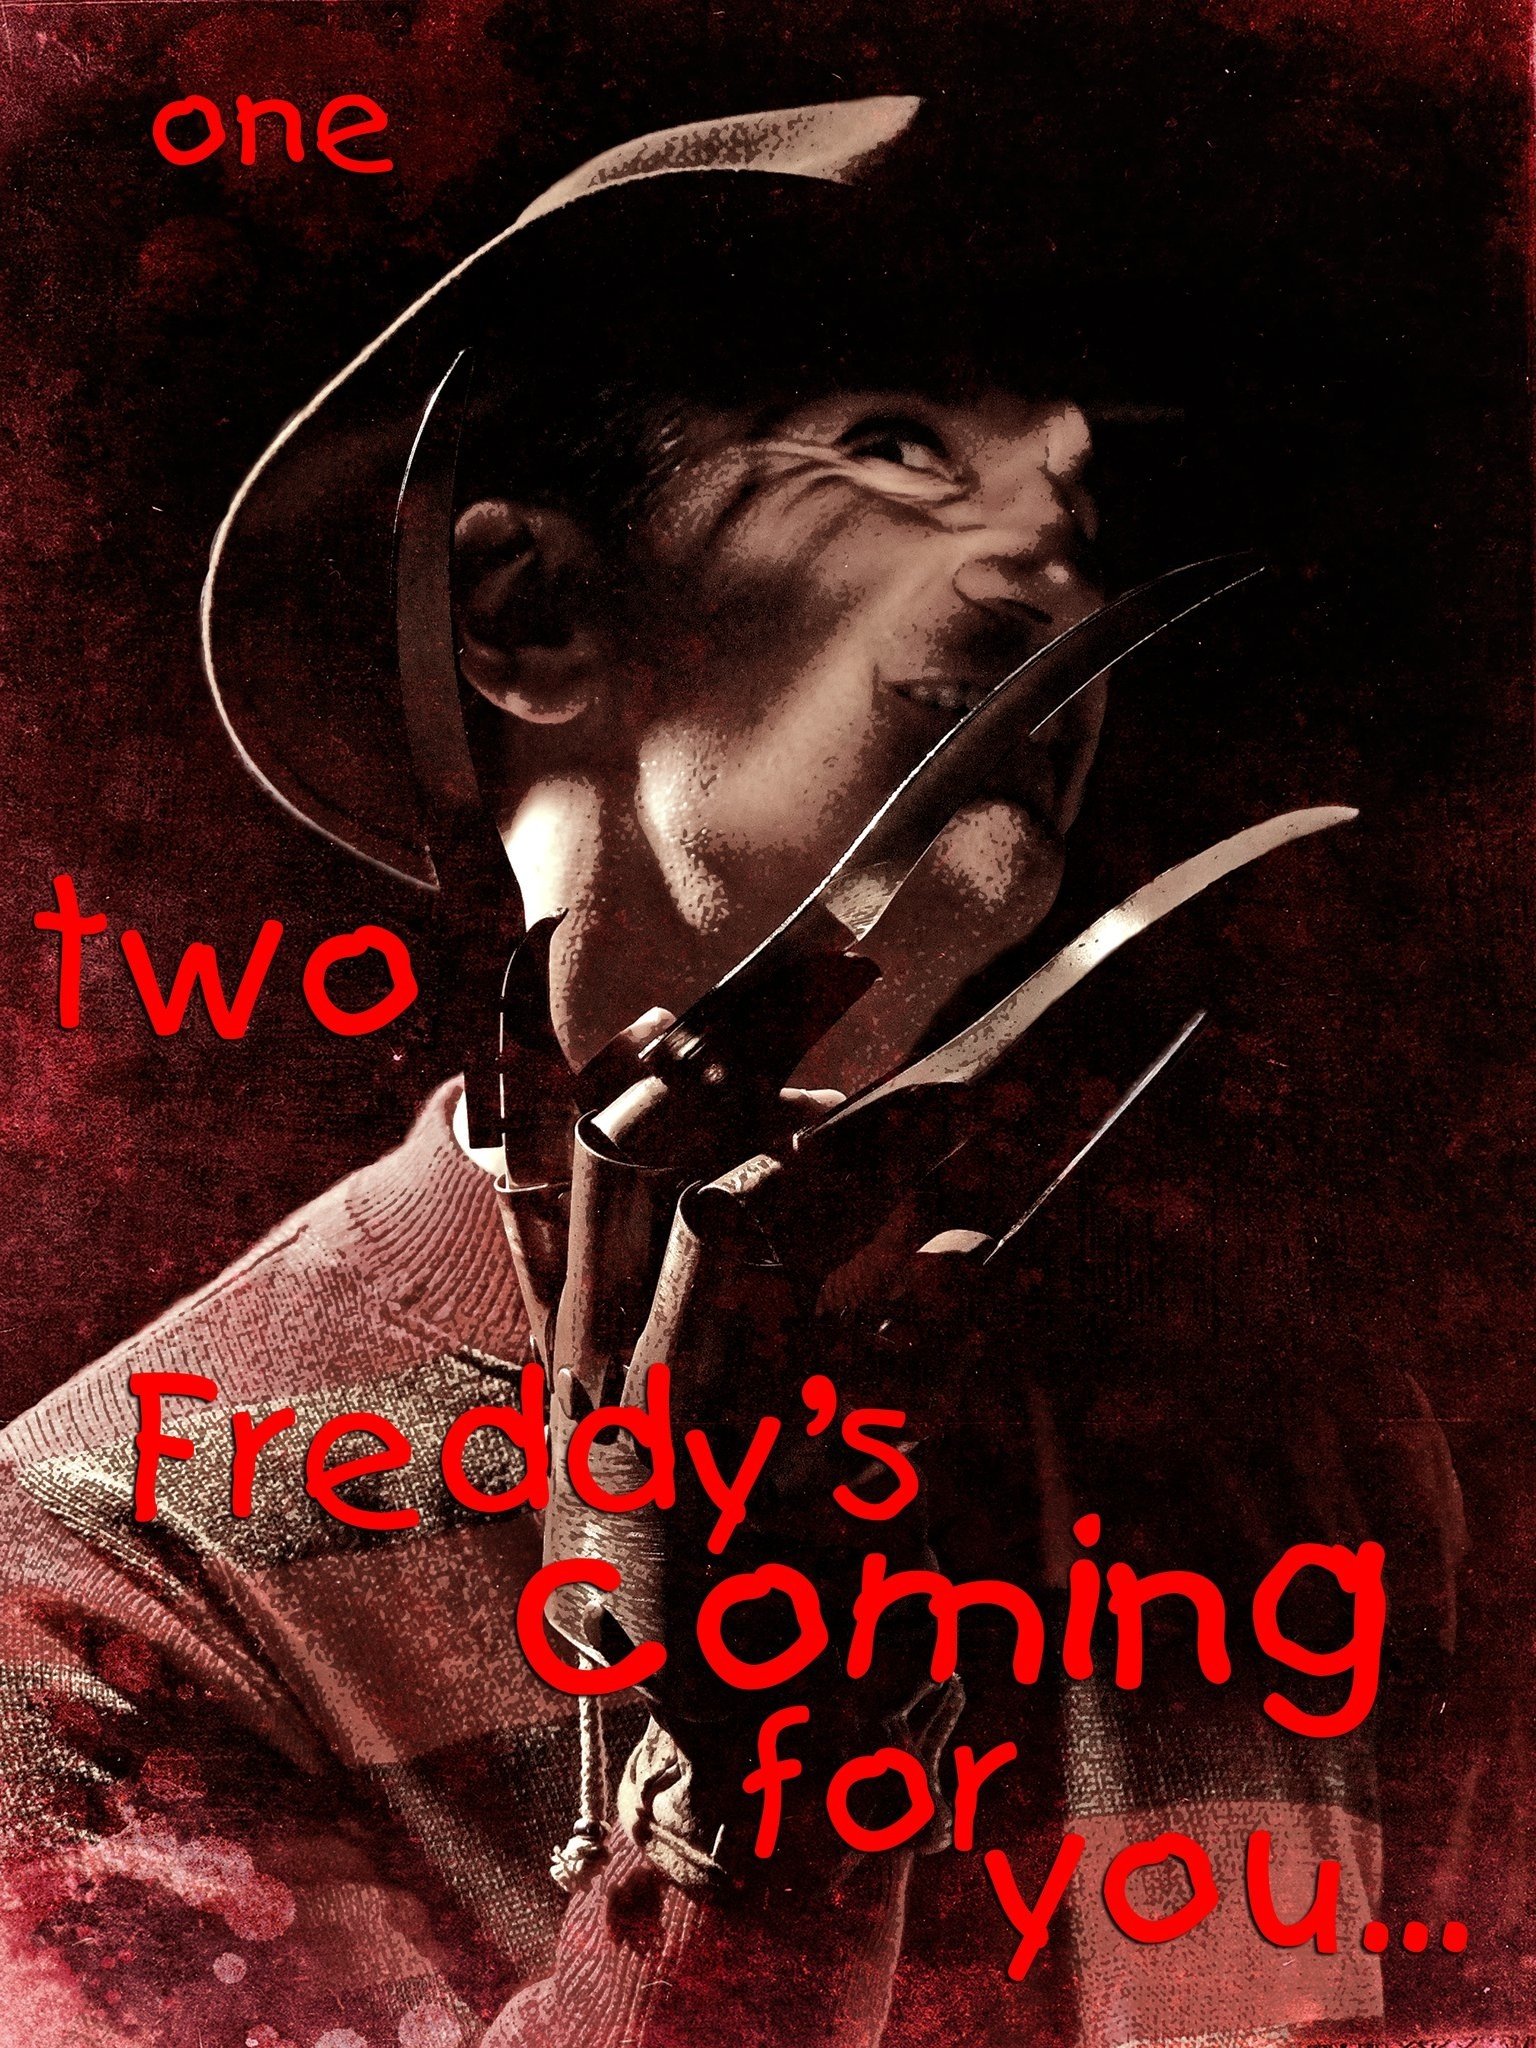 Promotional poster of Roberto Lombardi as Freddy Krueger